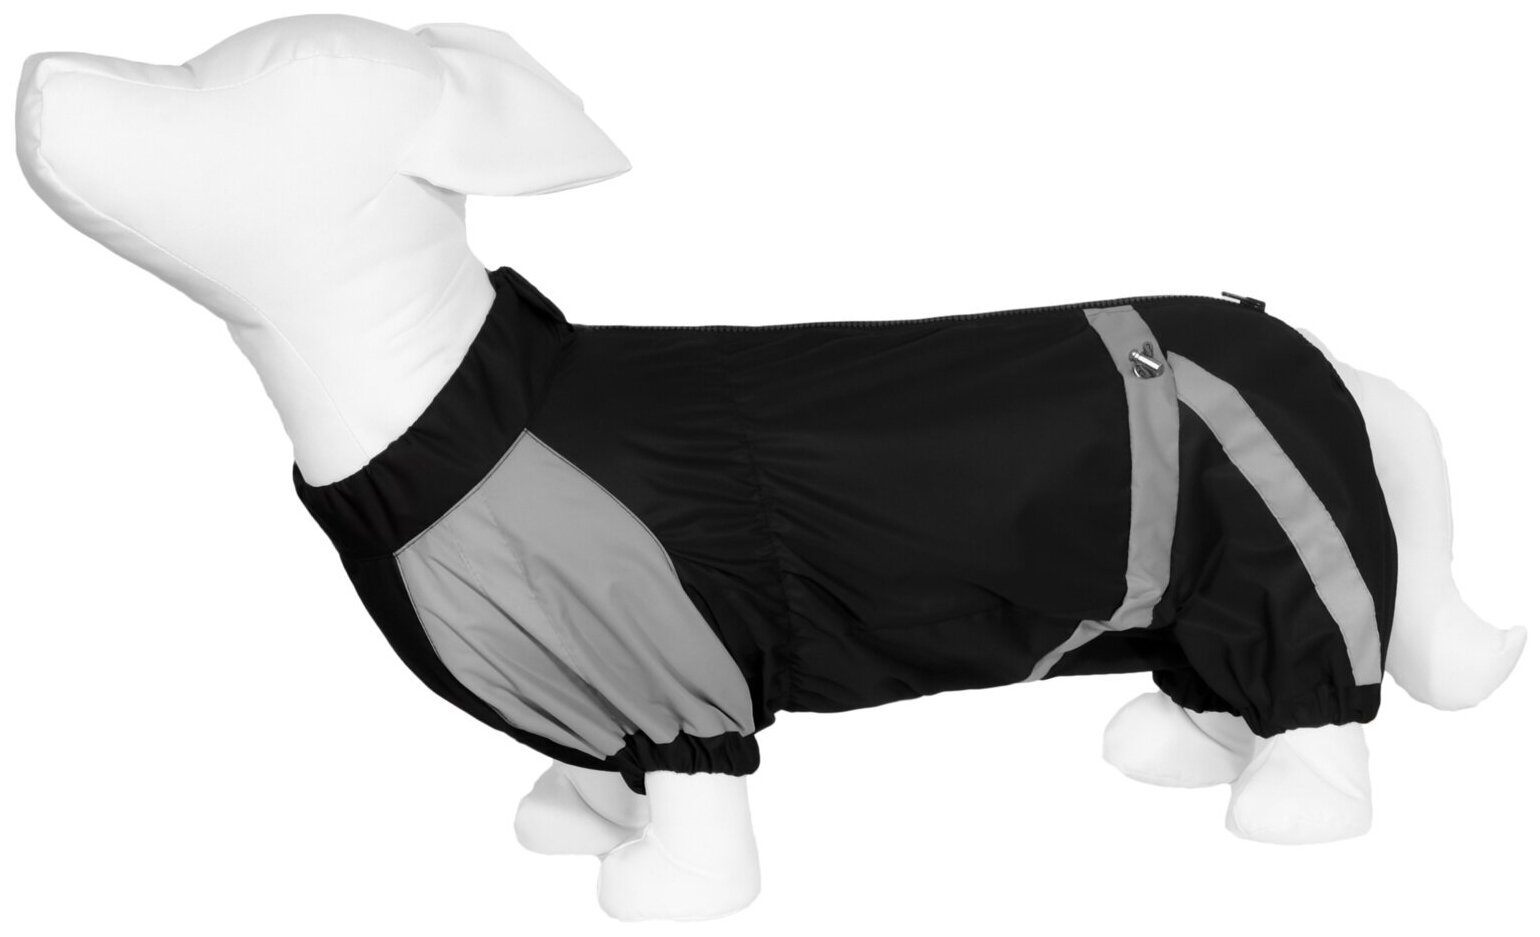 Tappi комбинезон Грайнд для собак на мальчика породы Корги, без подкладки, размер XL (спинка 45-48 см)